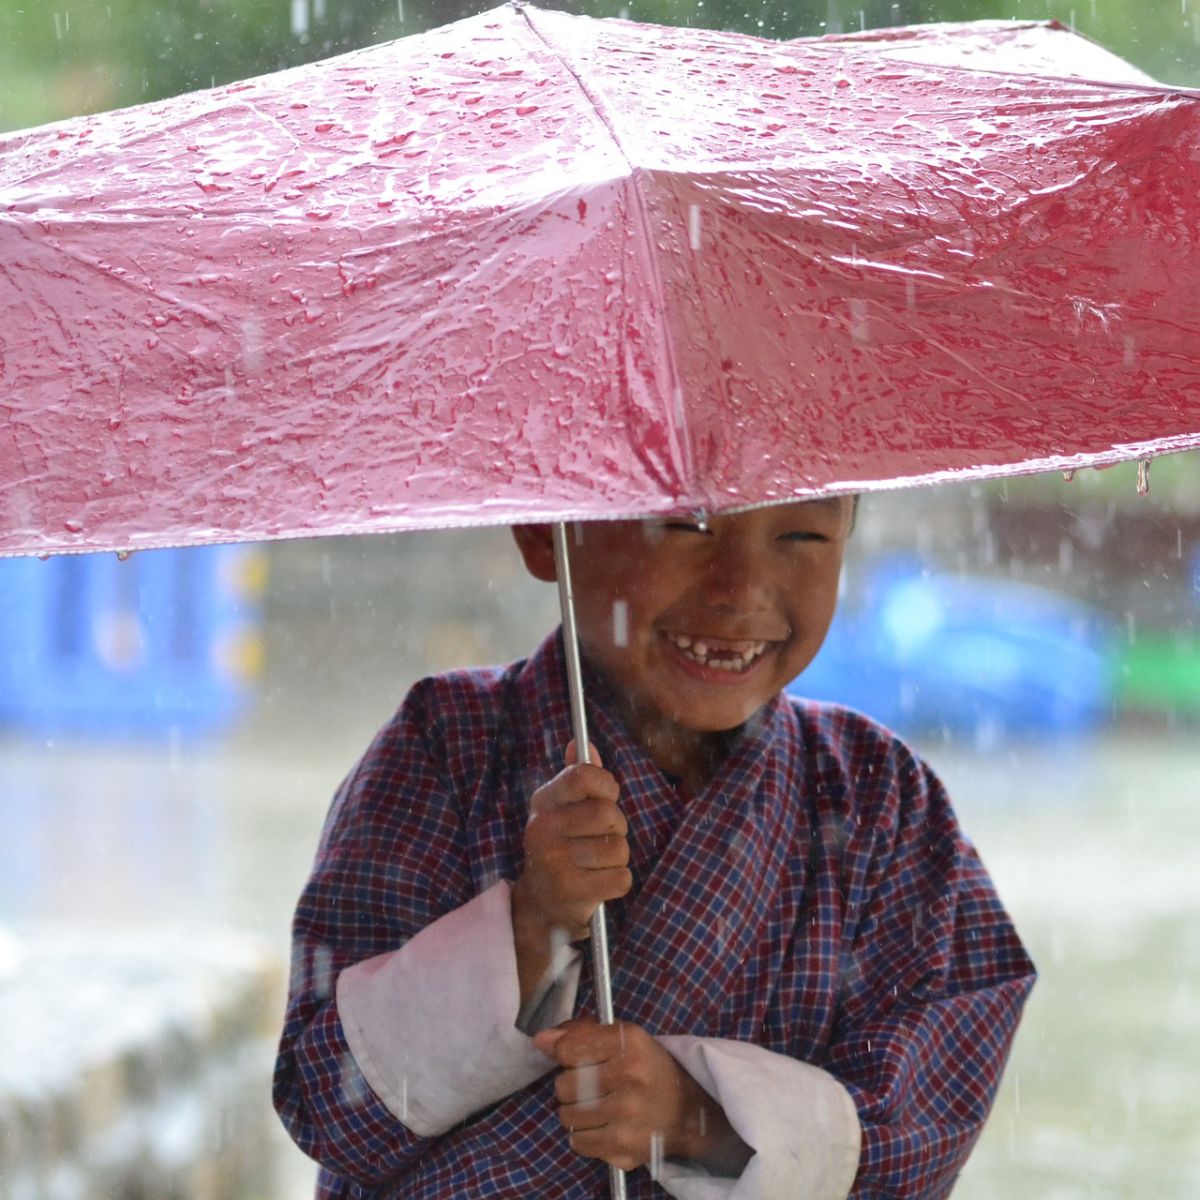 Rain and smiling boy with red umbrella, Bhutan